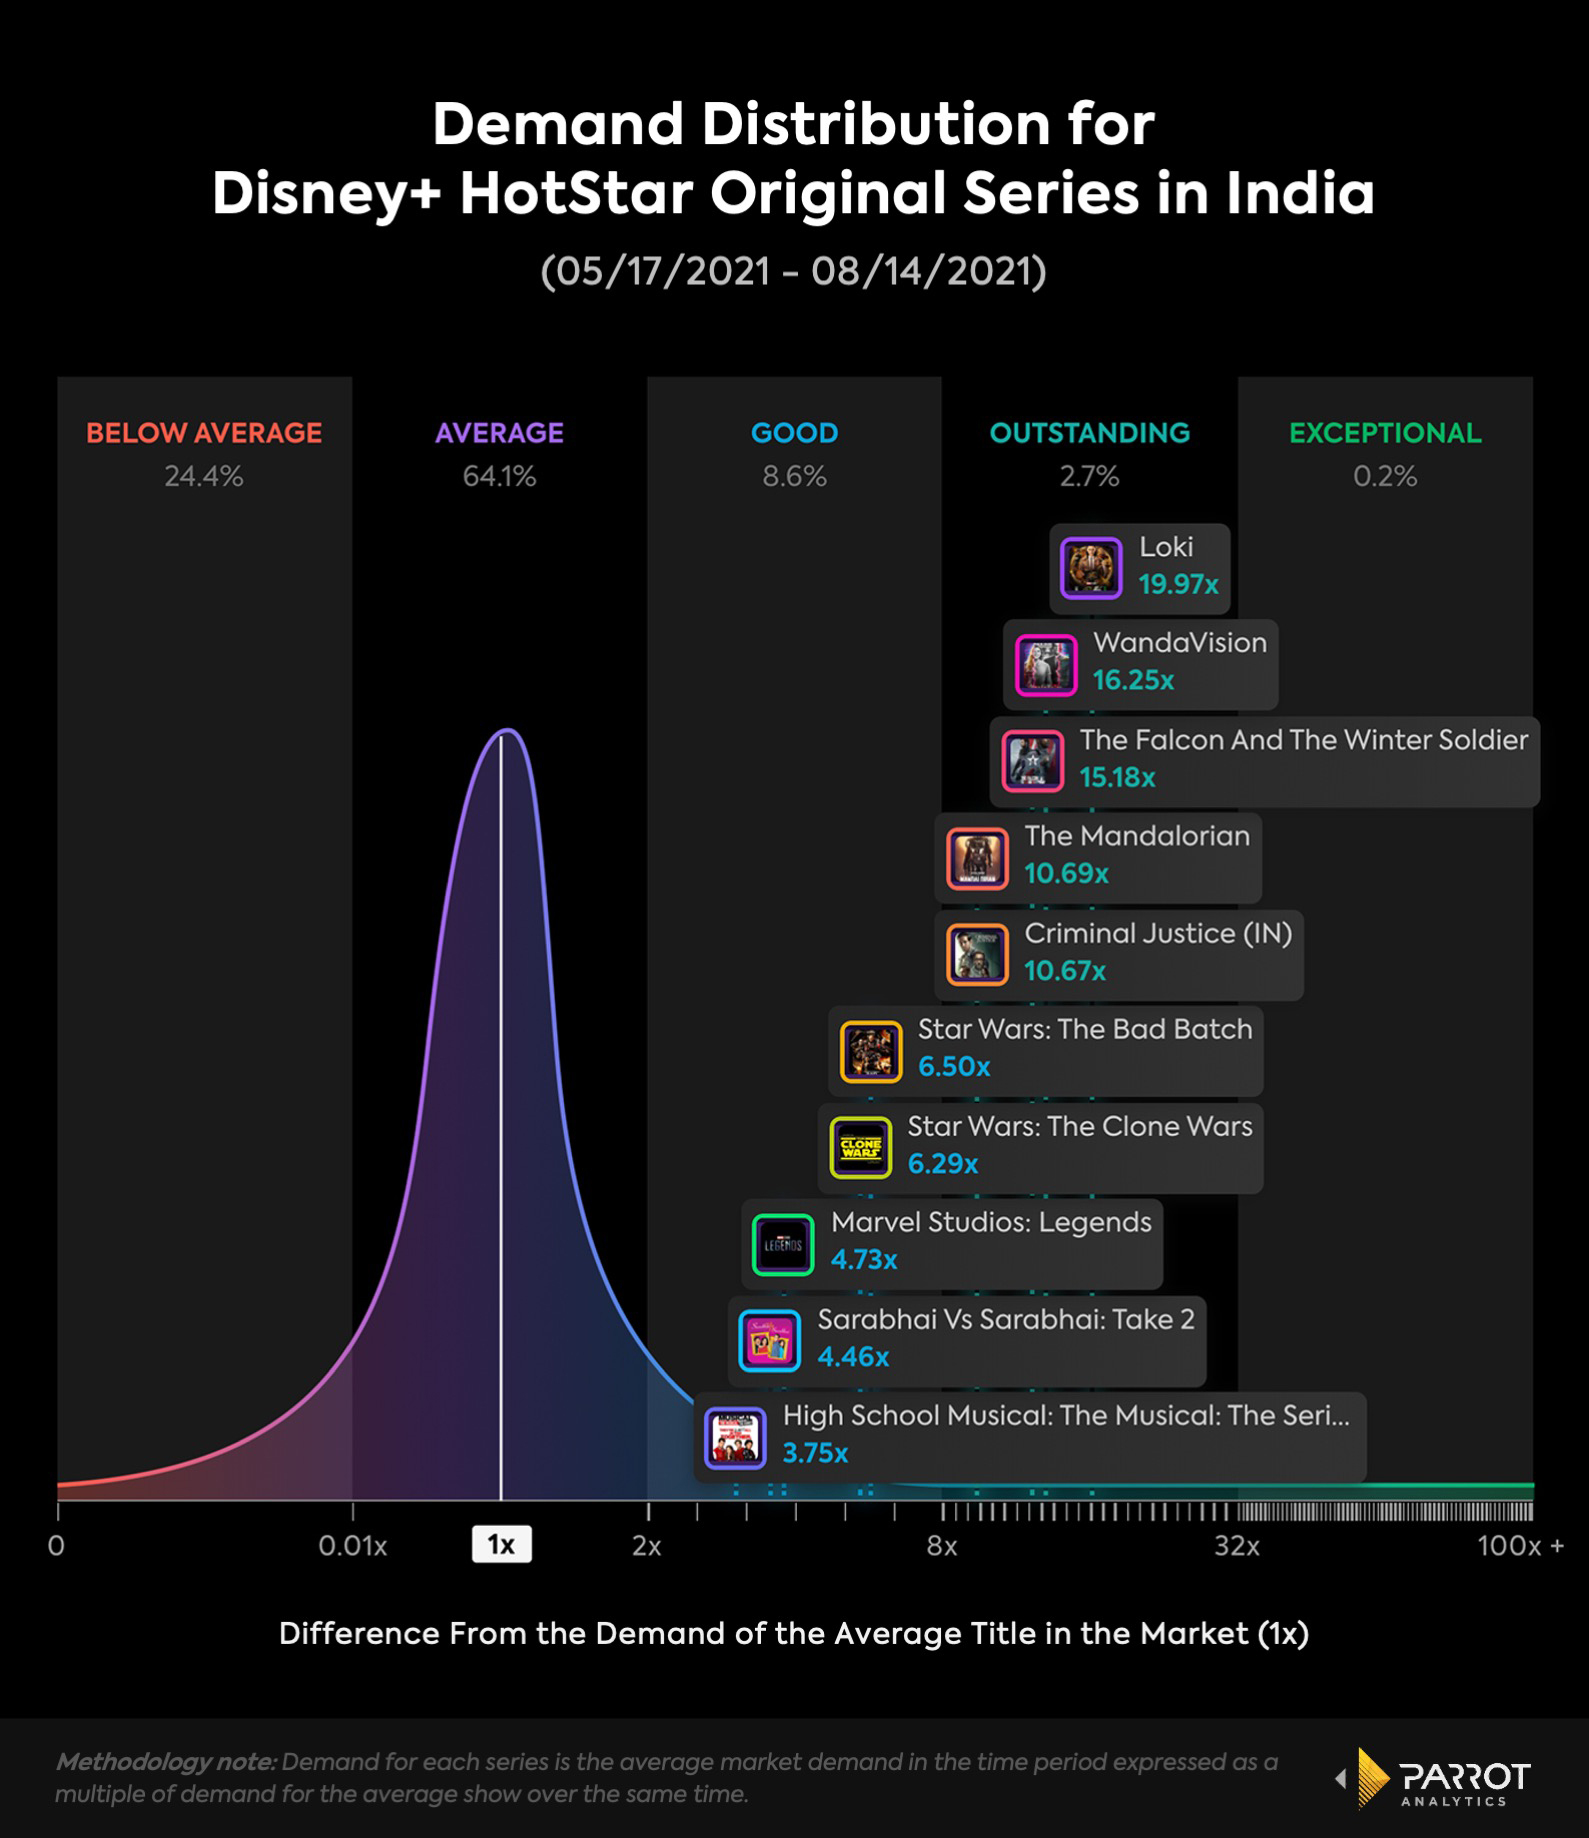 Parrot_Demand Distribution for Disney+ HotStar Original Series in India.jpg